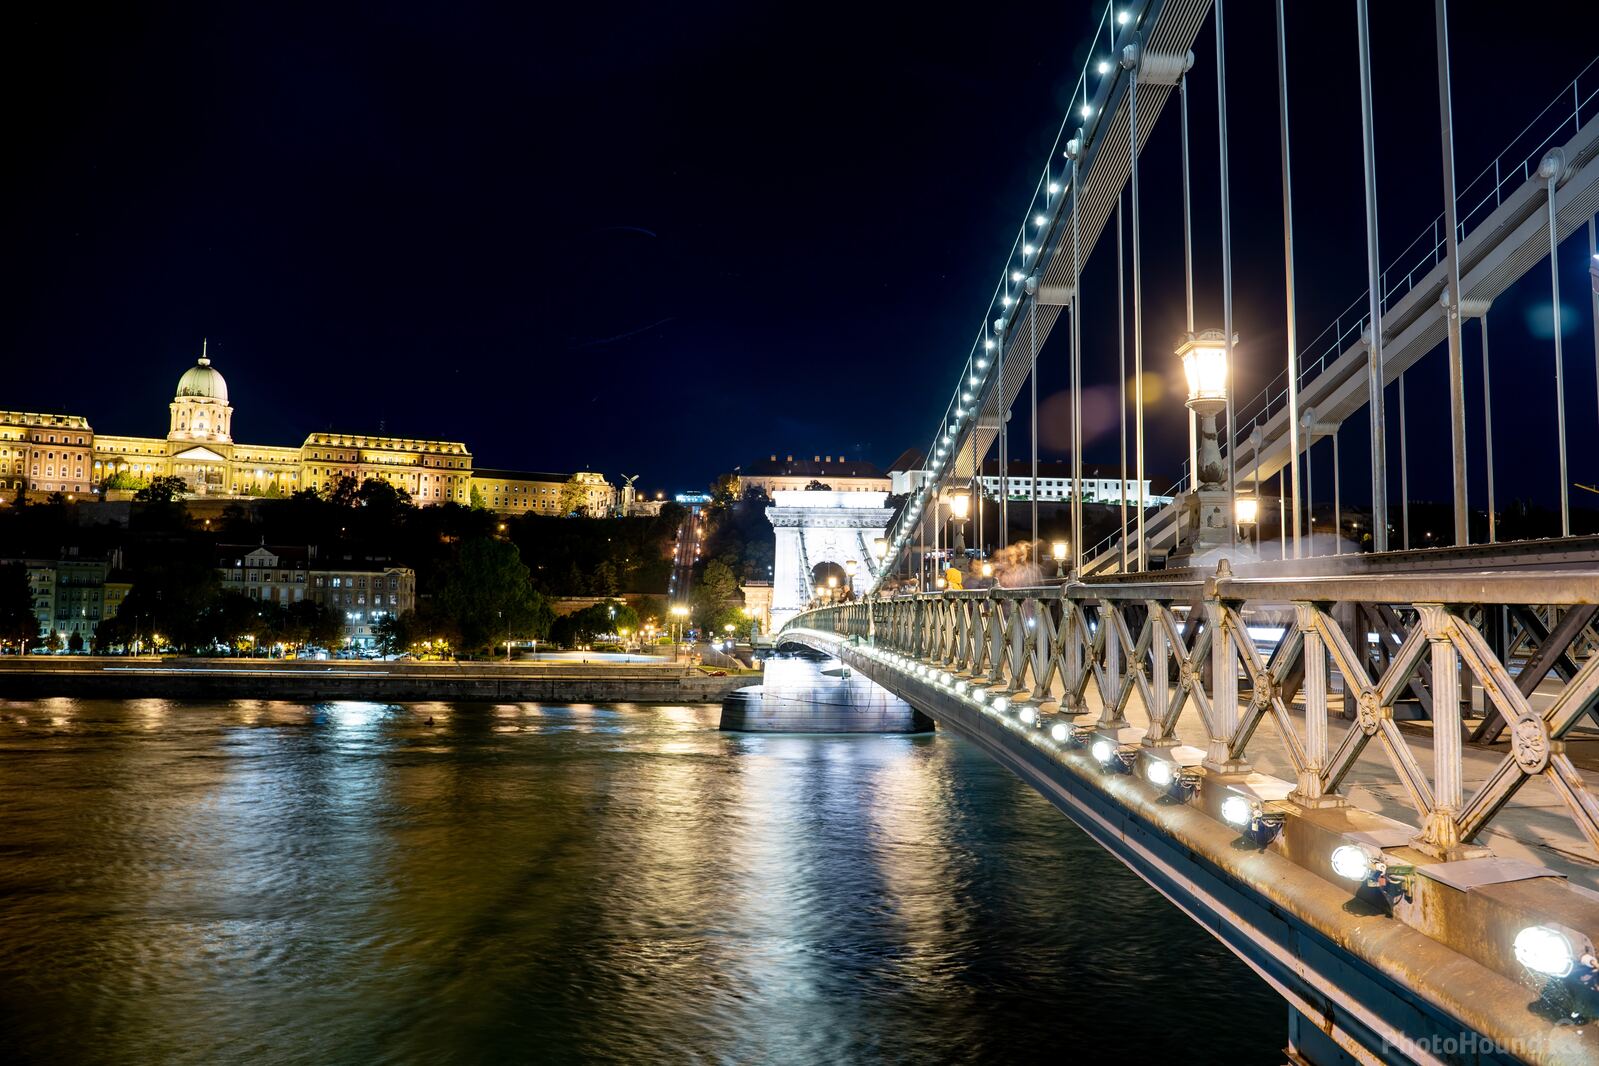 Image of Chain Bridge - Danube Viewpoint by Team PhotoHound